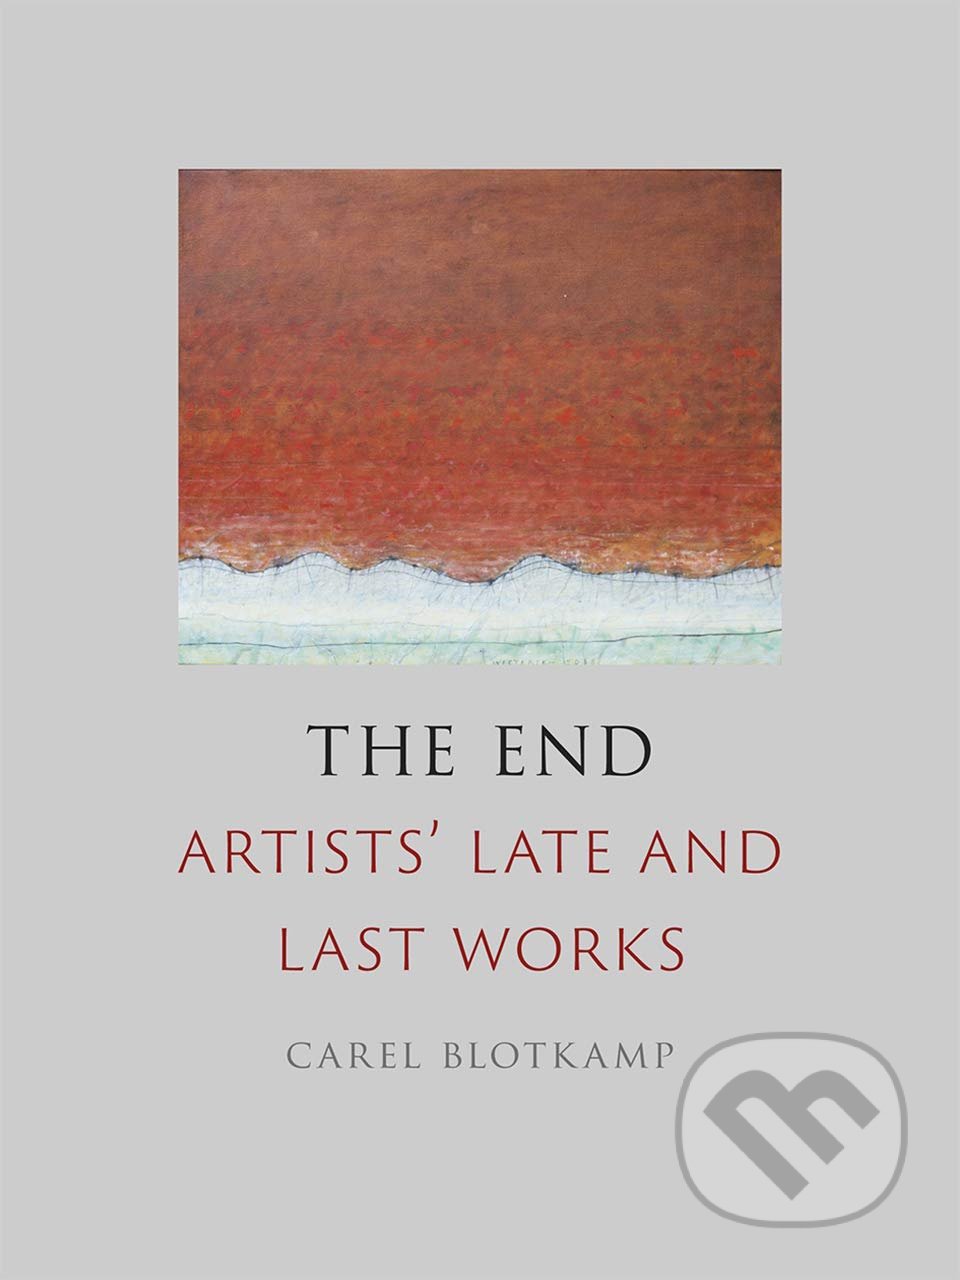 The End - Carel Blotkamp, Reaktion Books, 2019